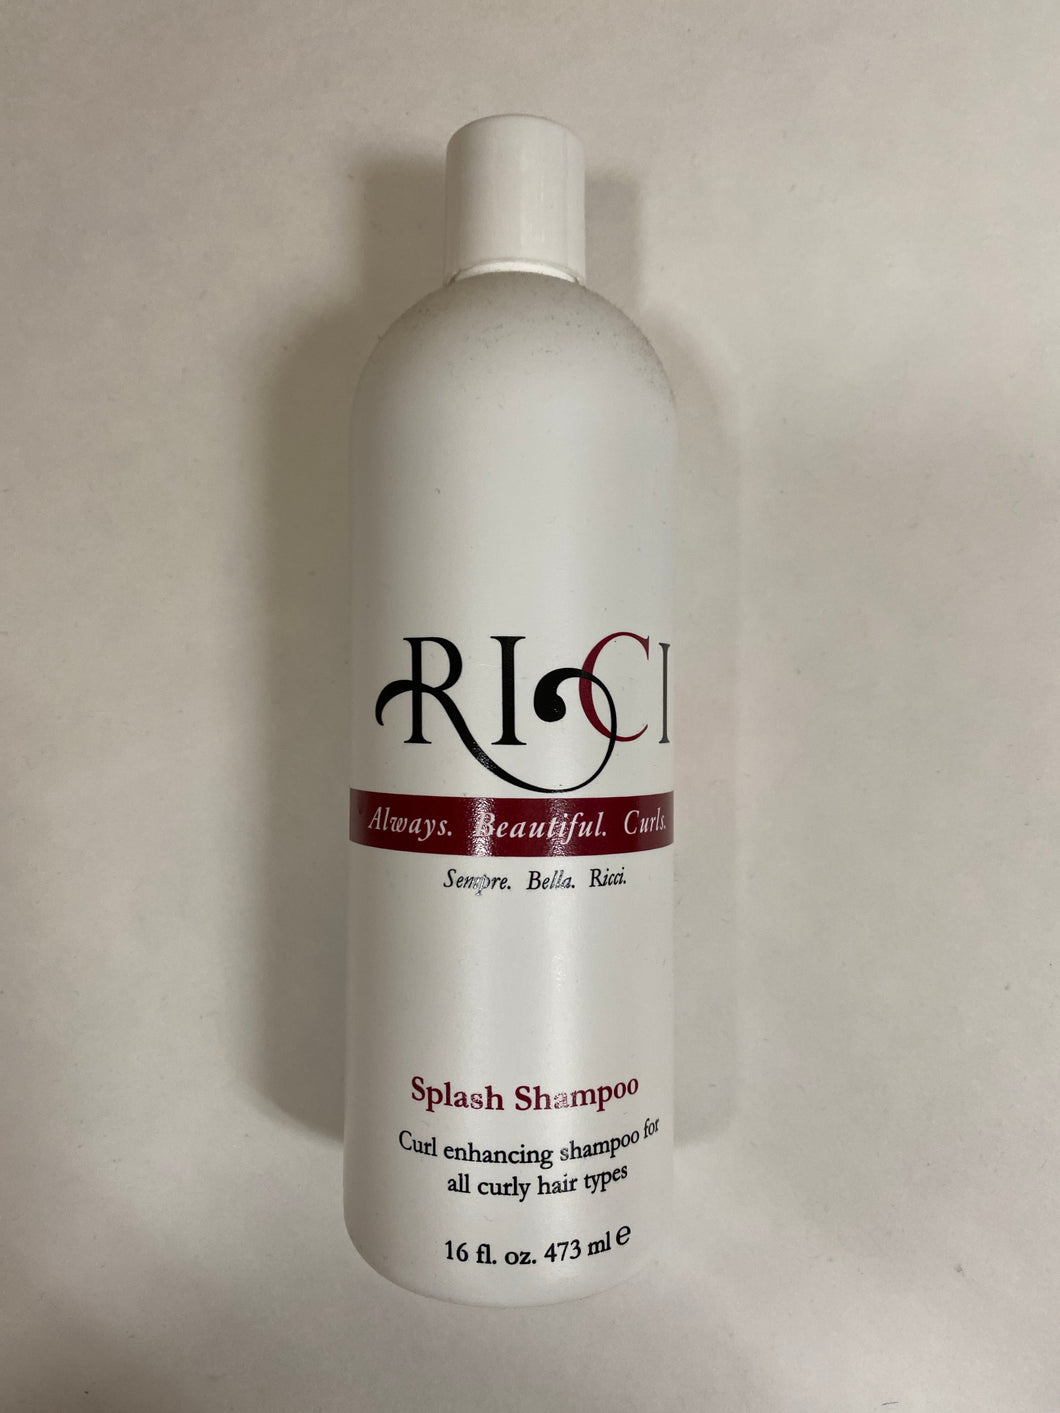 Rici Splash Shampoo Curl Enhancing Shampoo